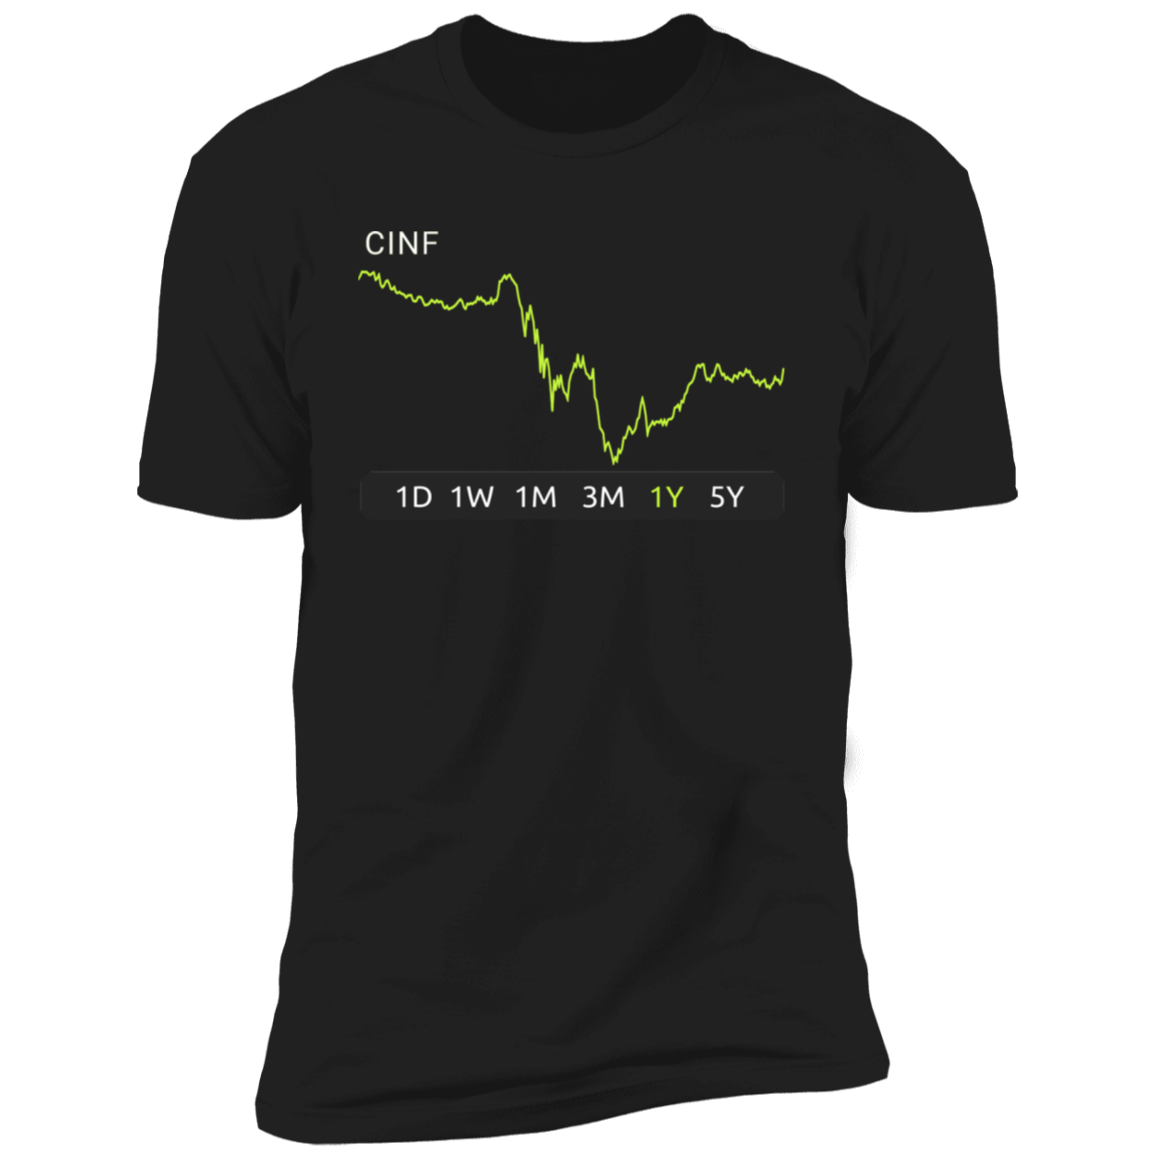 CINF Stock 1y Premium T-Shirt